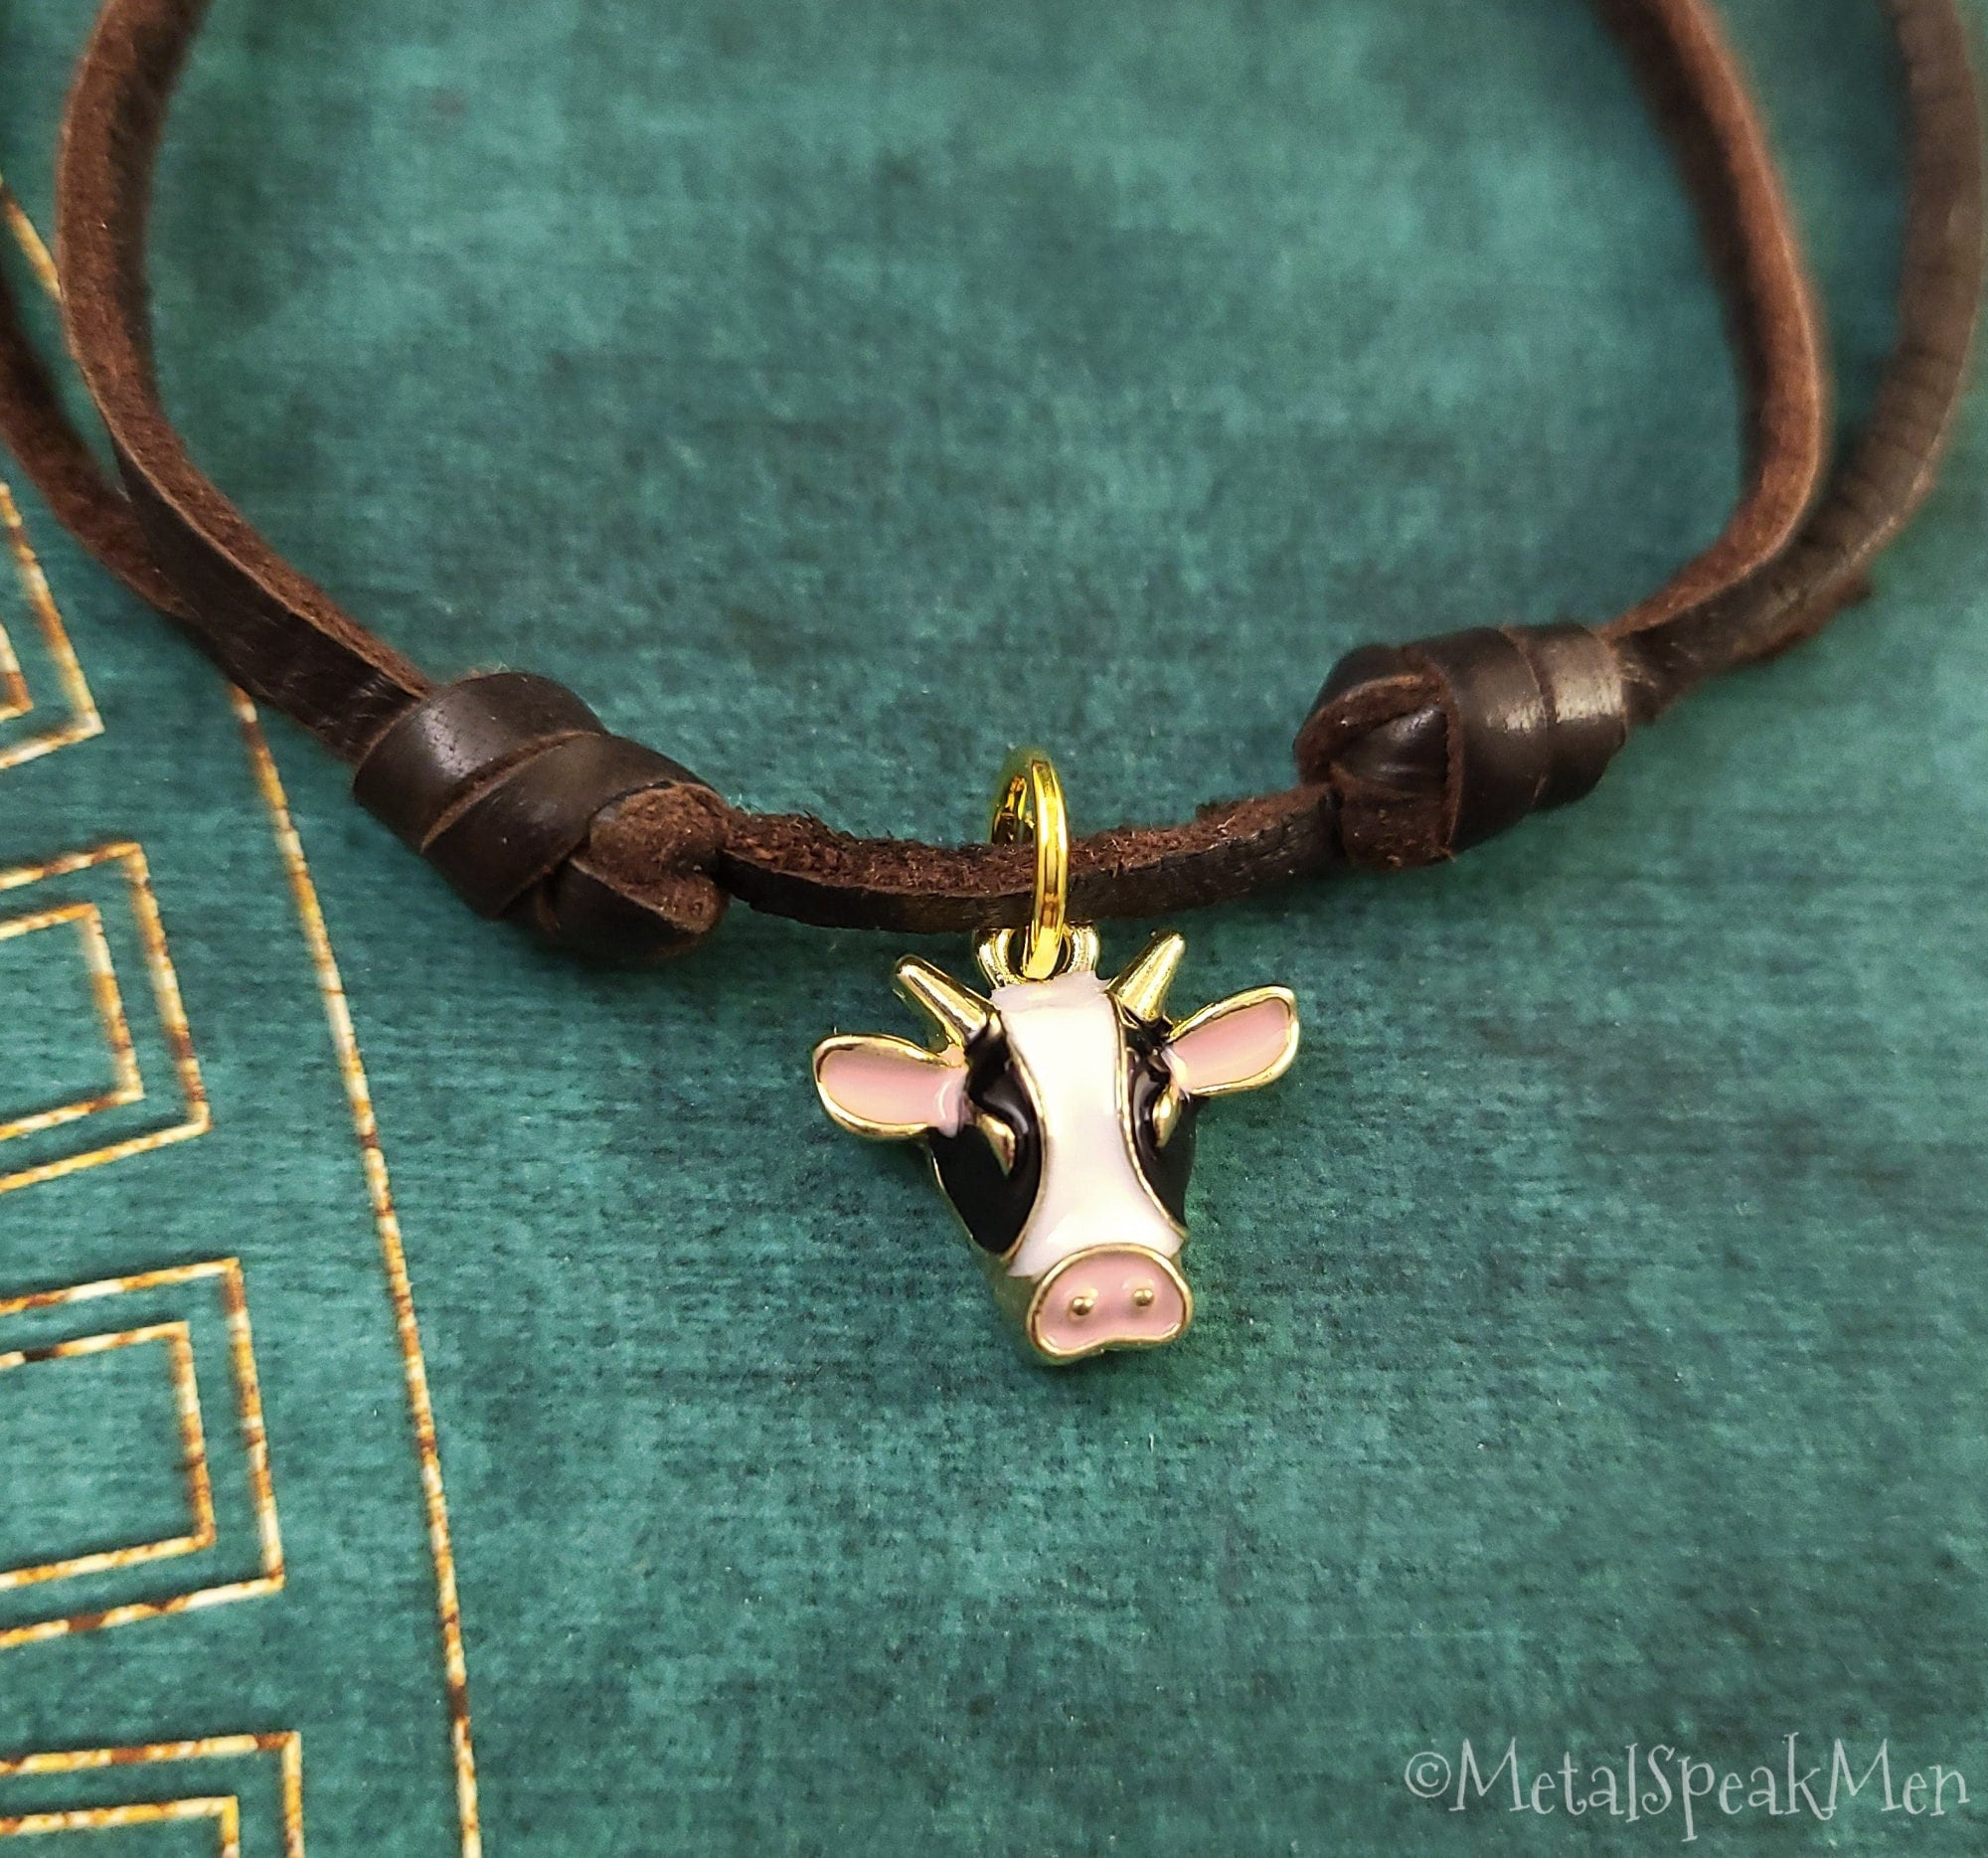 Framendino, Mini Cow Resin Charms Cow Pendant Cute Black White Cow Animal  Dangle Beads for DIY Jewelry Making Farm Theme Earring Necklace Bracelet